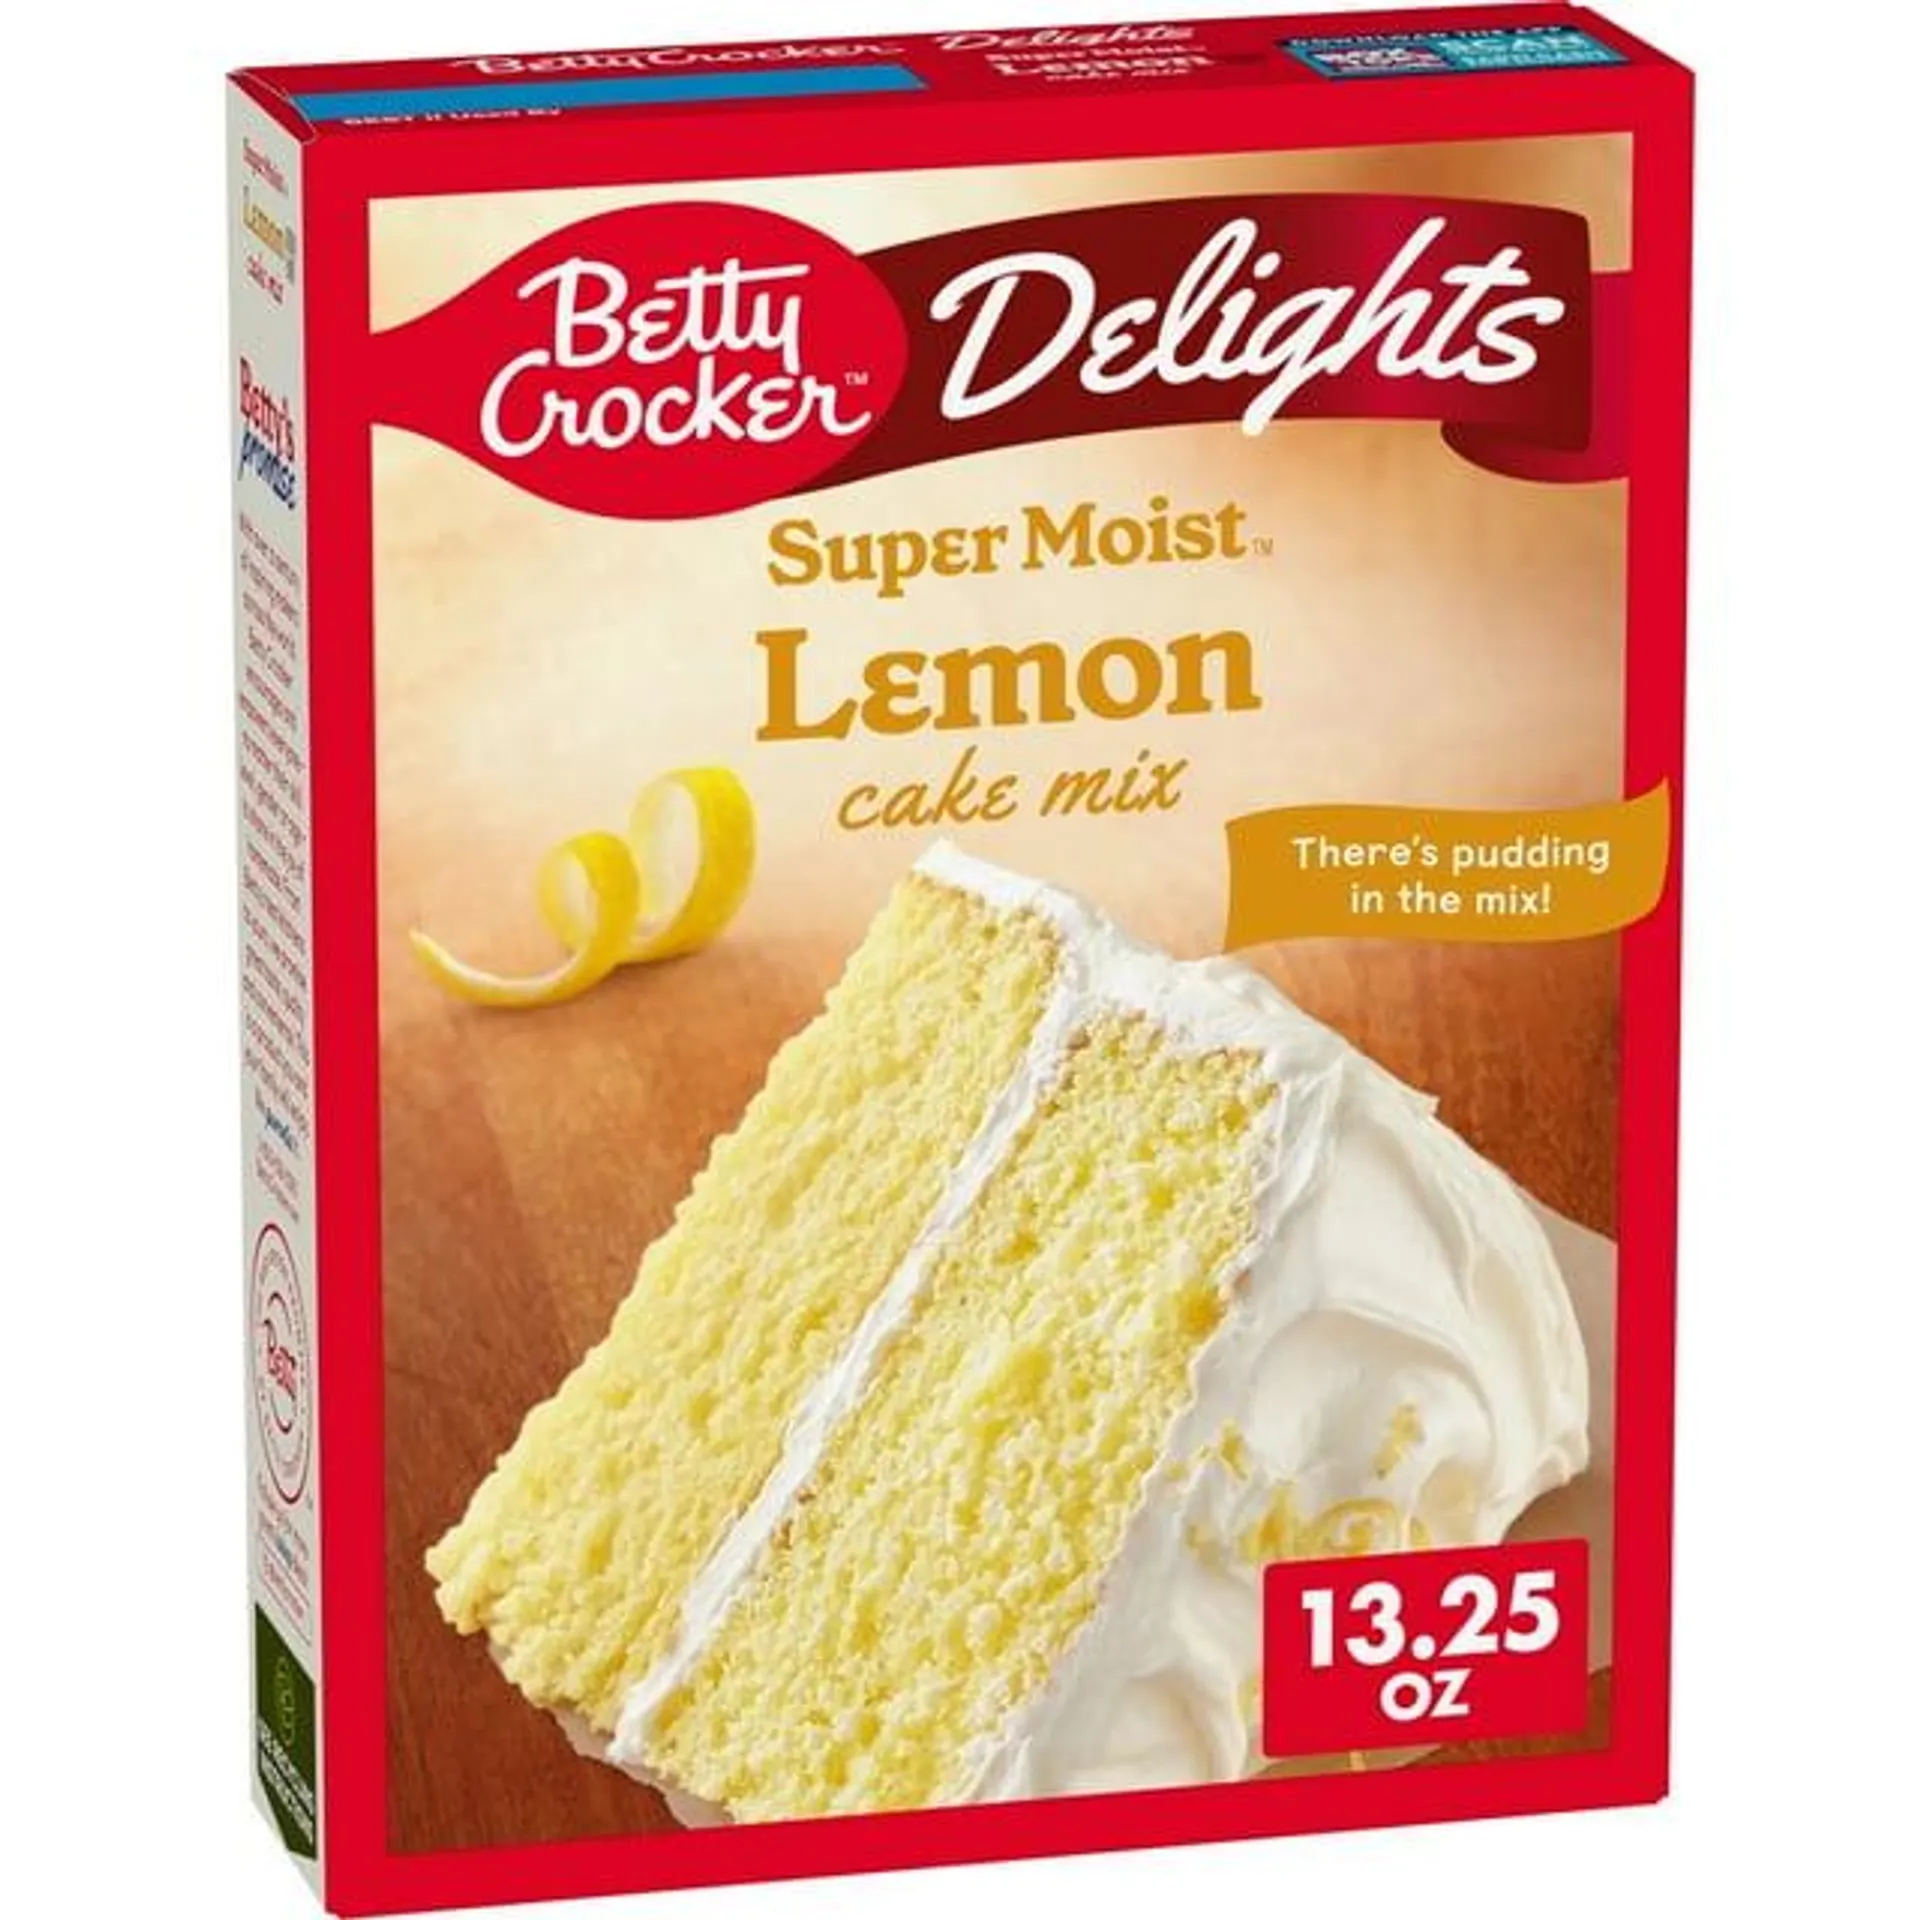 Betty Crocker Delights Super Moist Lemon Cake Mix, 13.25 oz.